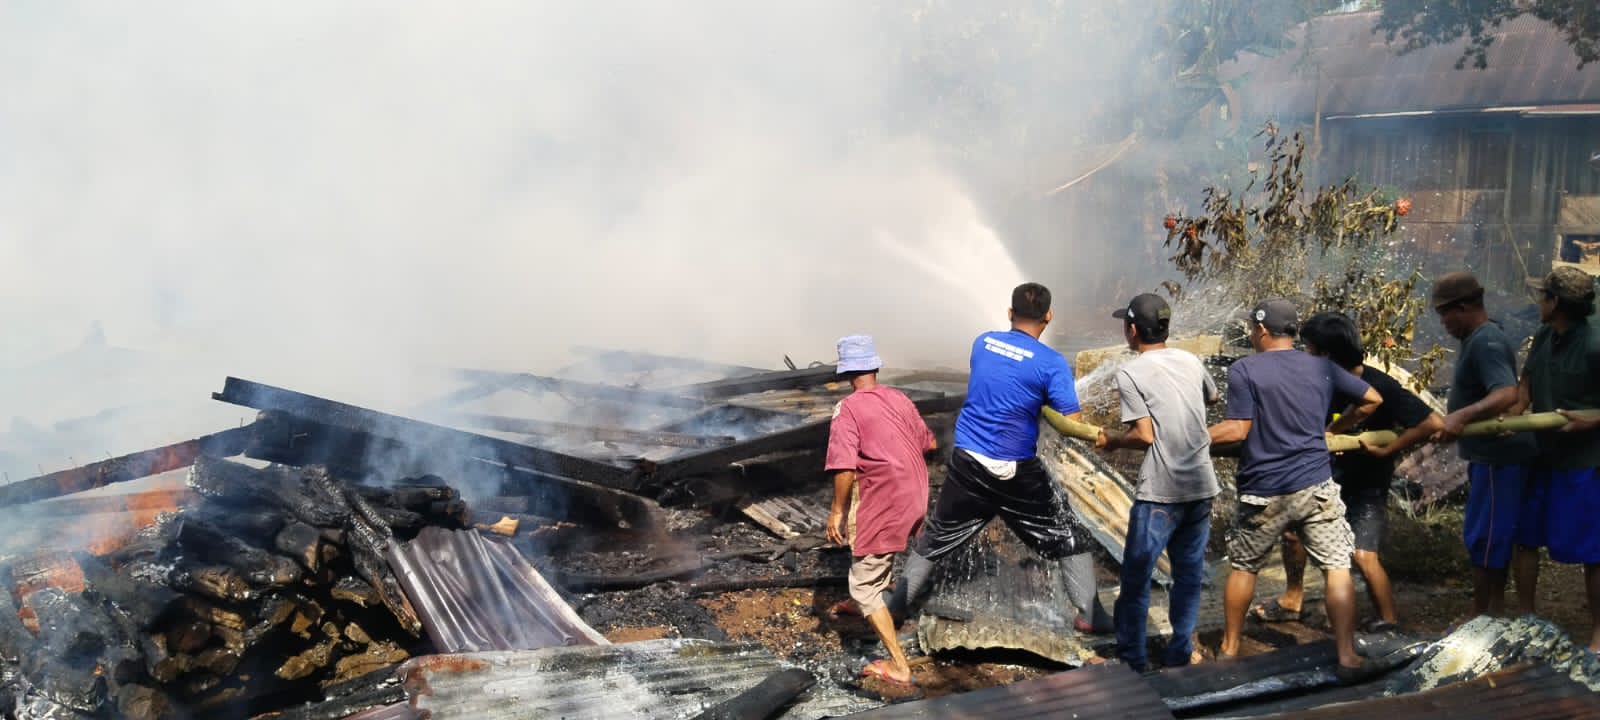 BREAKING NEWS!: Kebakaran Menghanguskan Satu Rumah di Desa Gunung Meraksa Lama